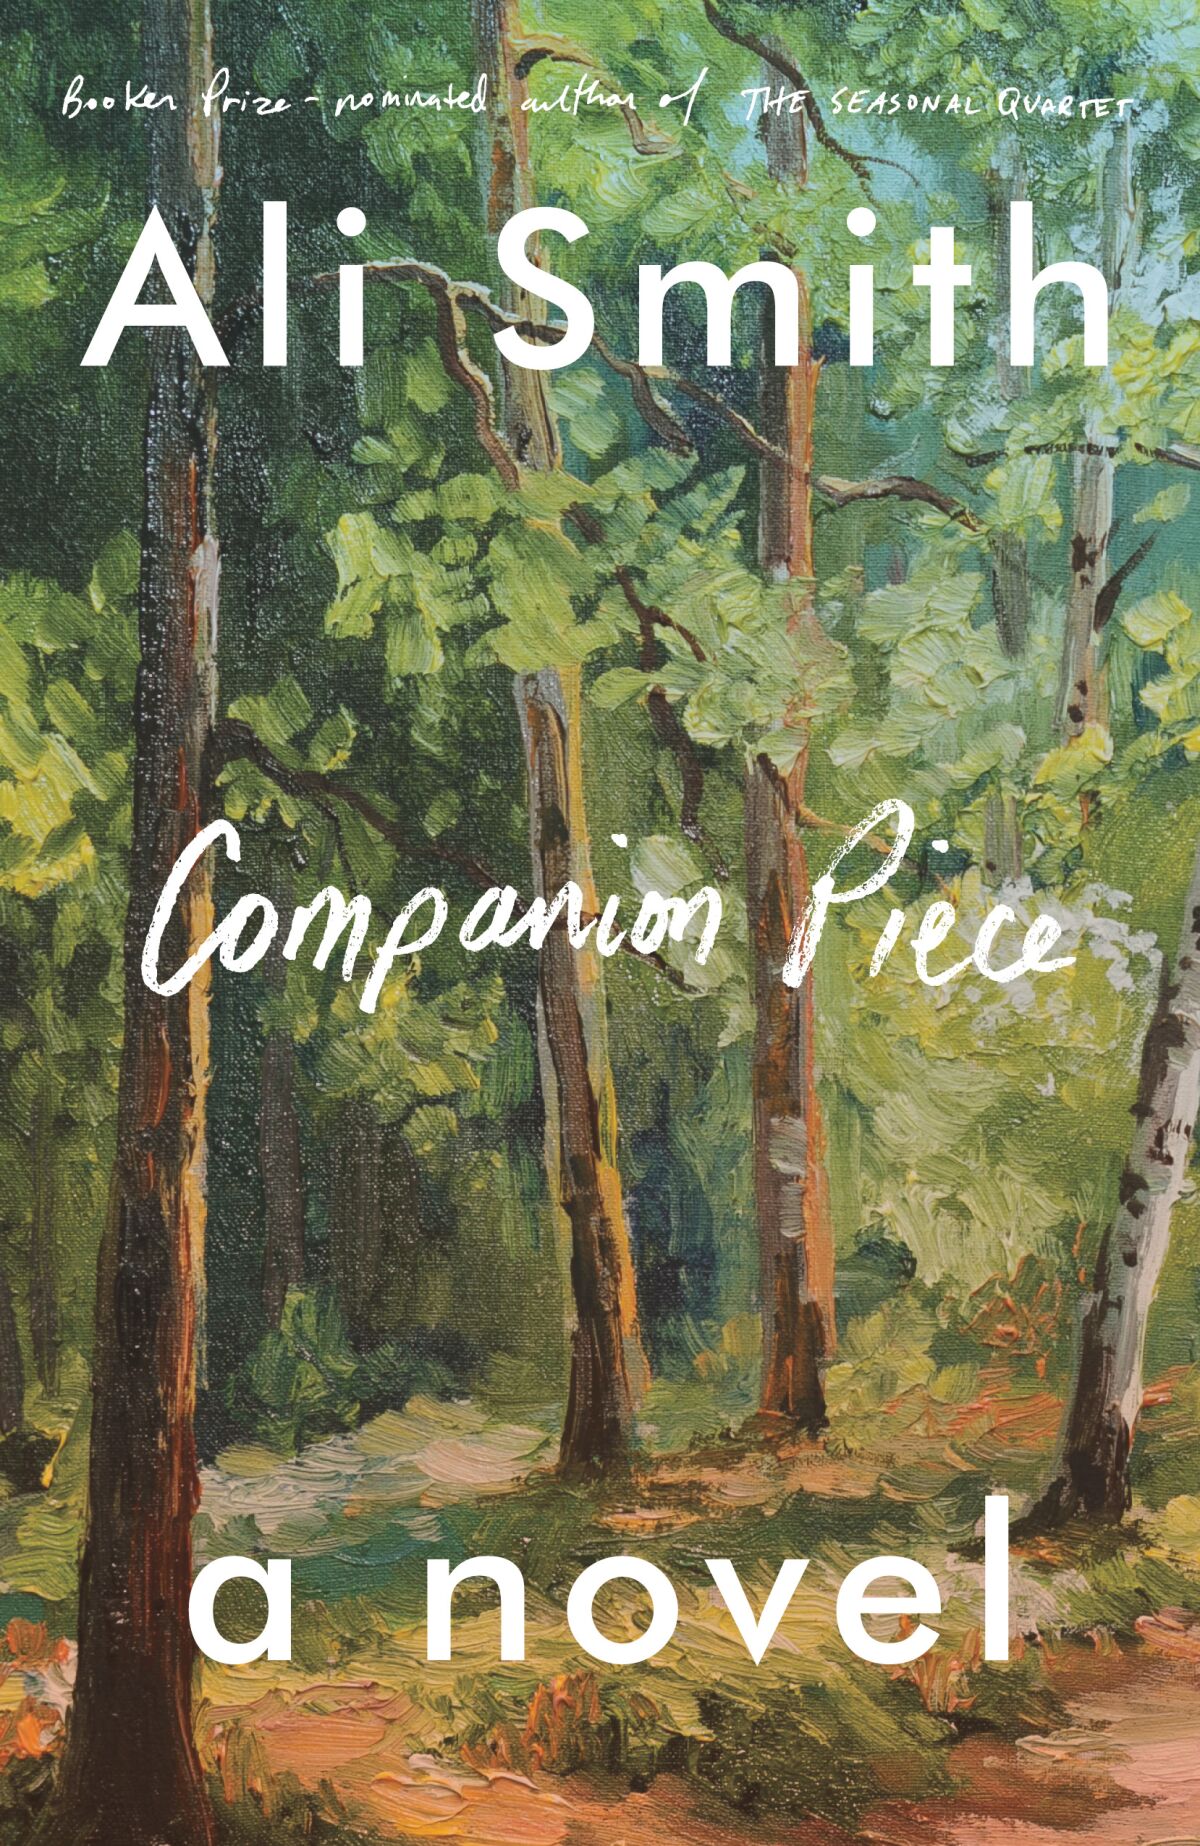 "Companion Piece" by Ali Smith